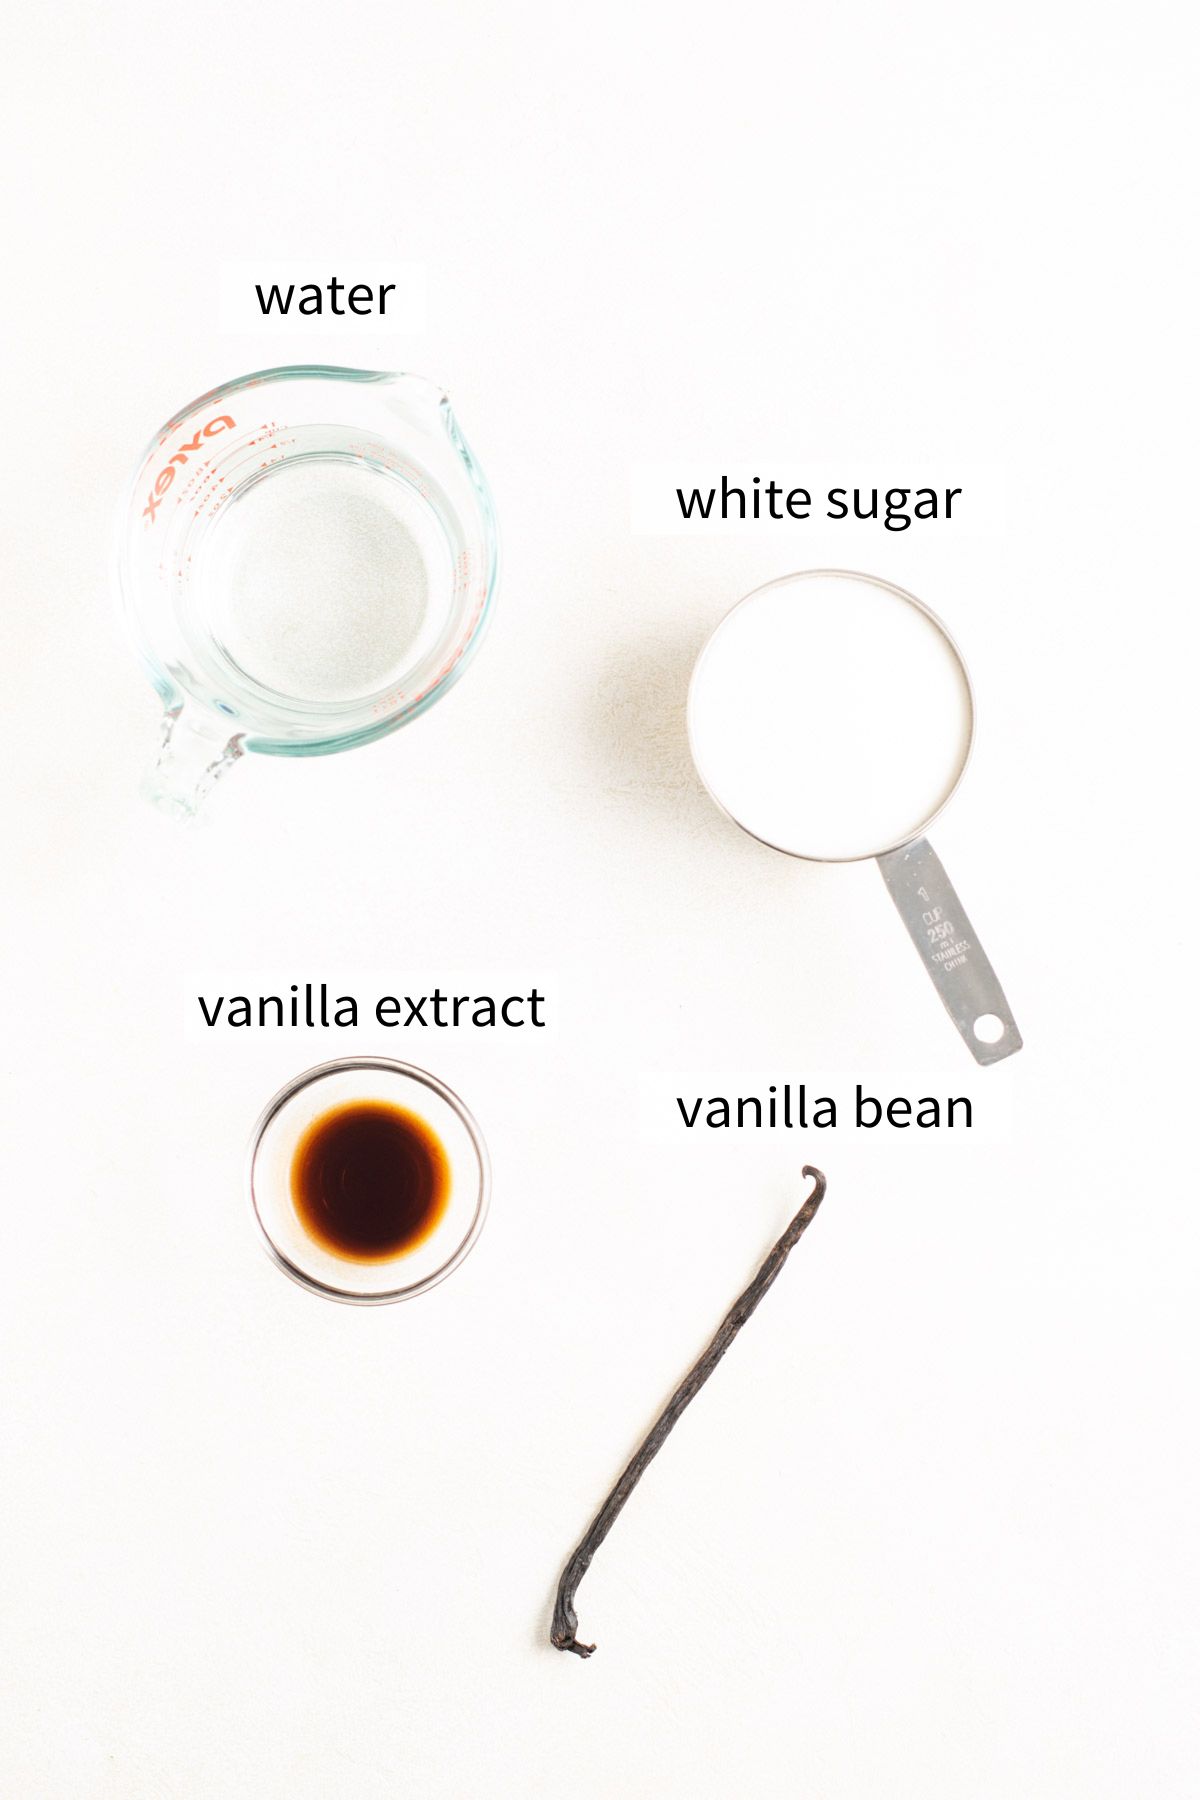 ingredients to make vanilla simple syrup.